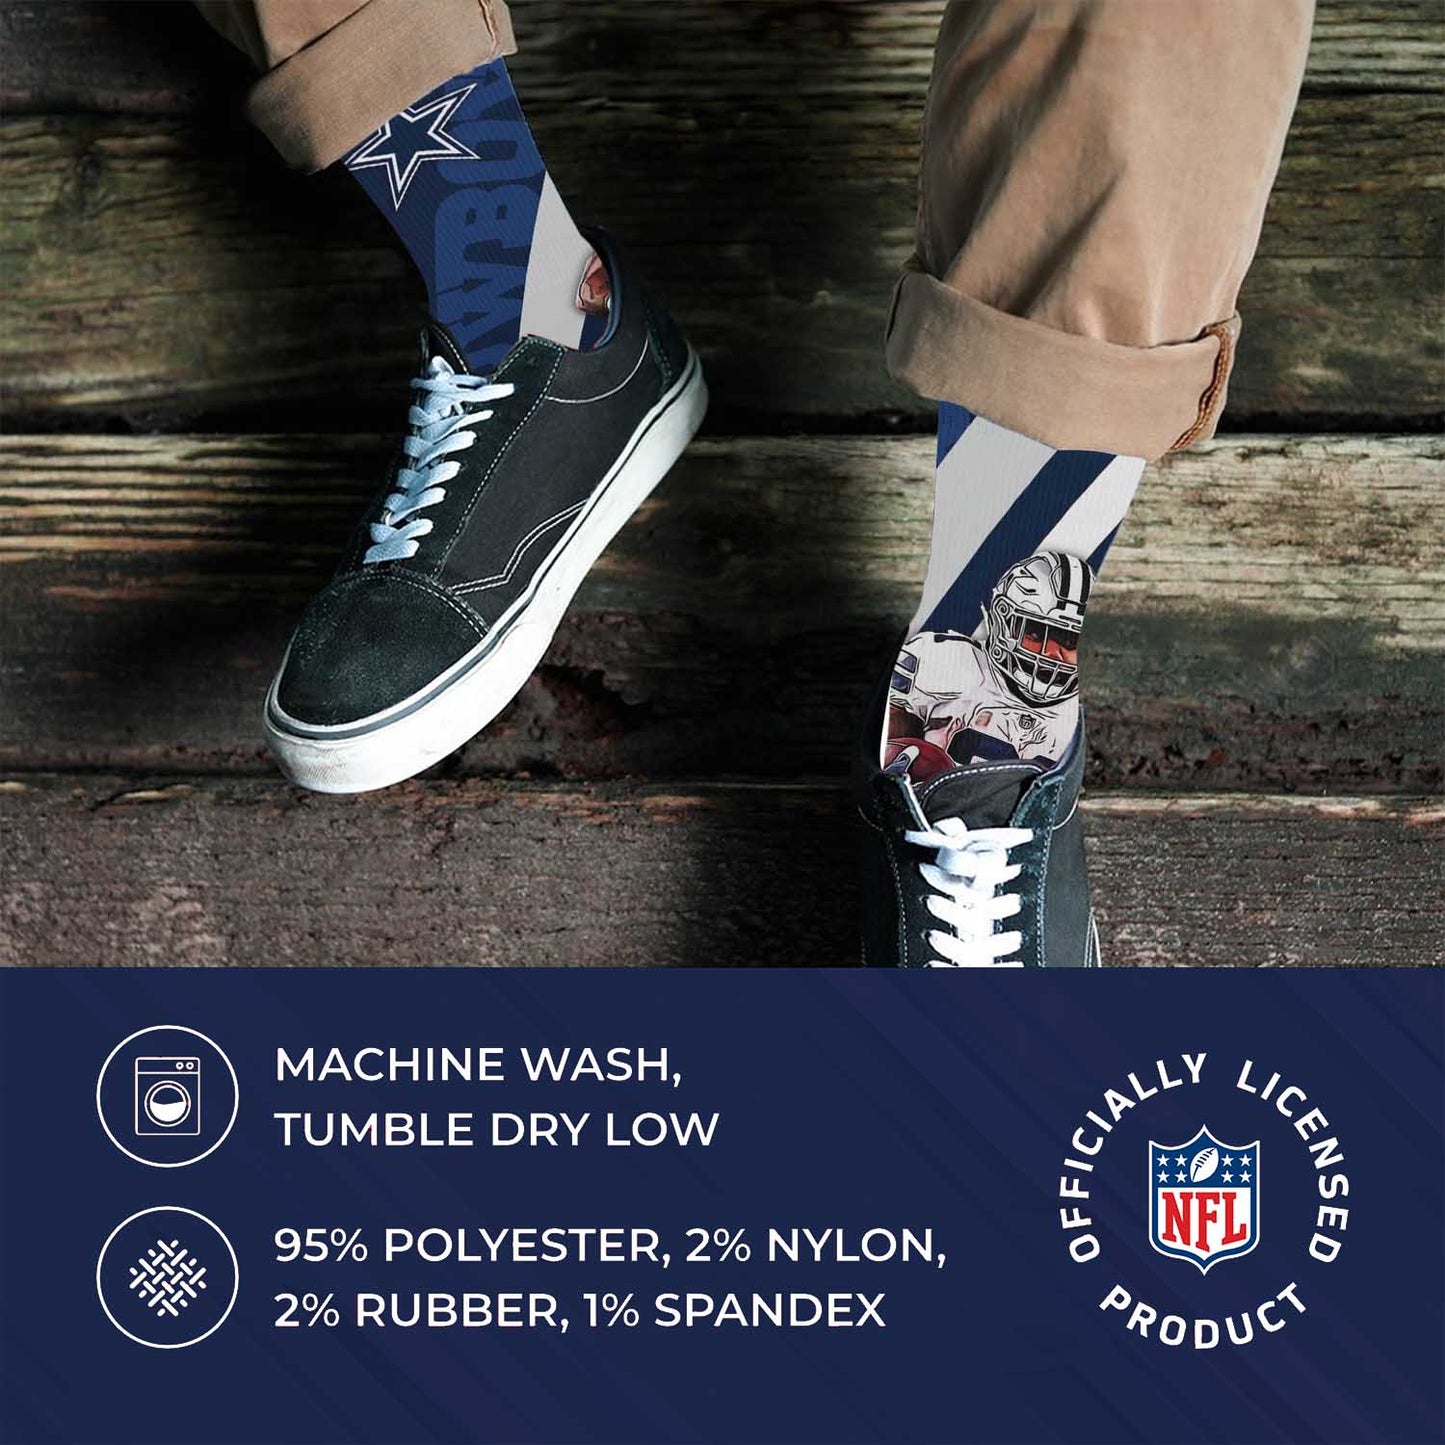 Dallas Cowboys NFL Adult Player Stripe Sock - Navy